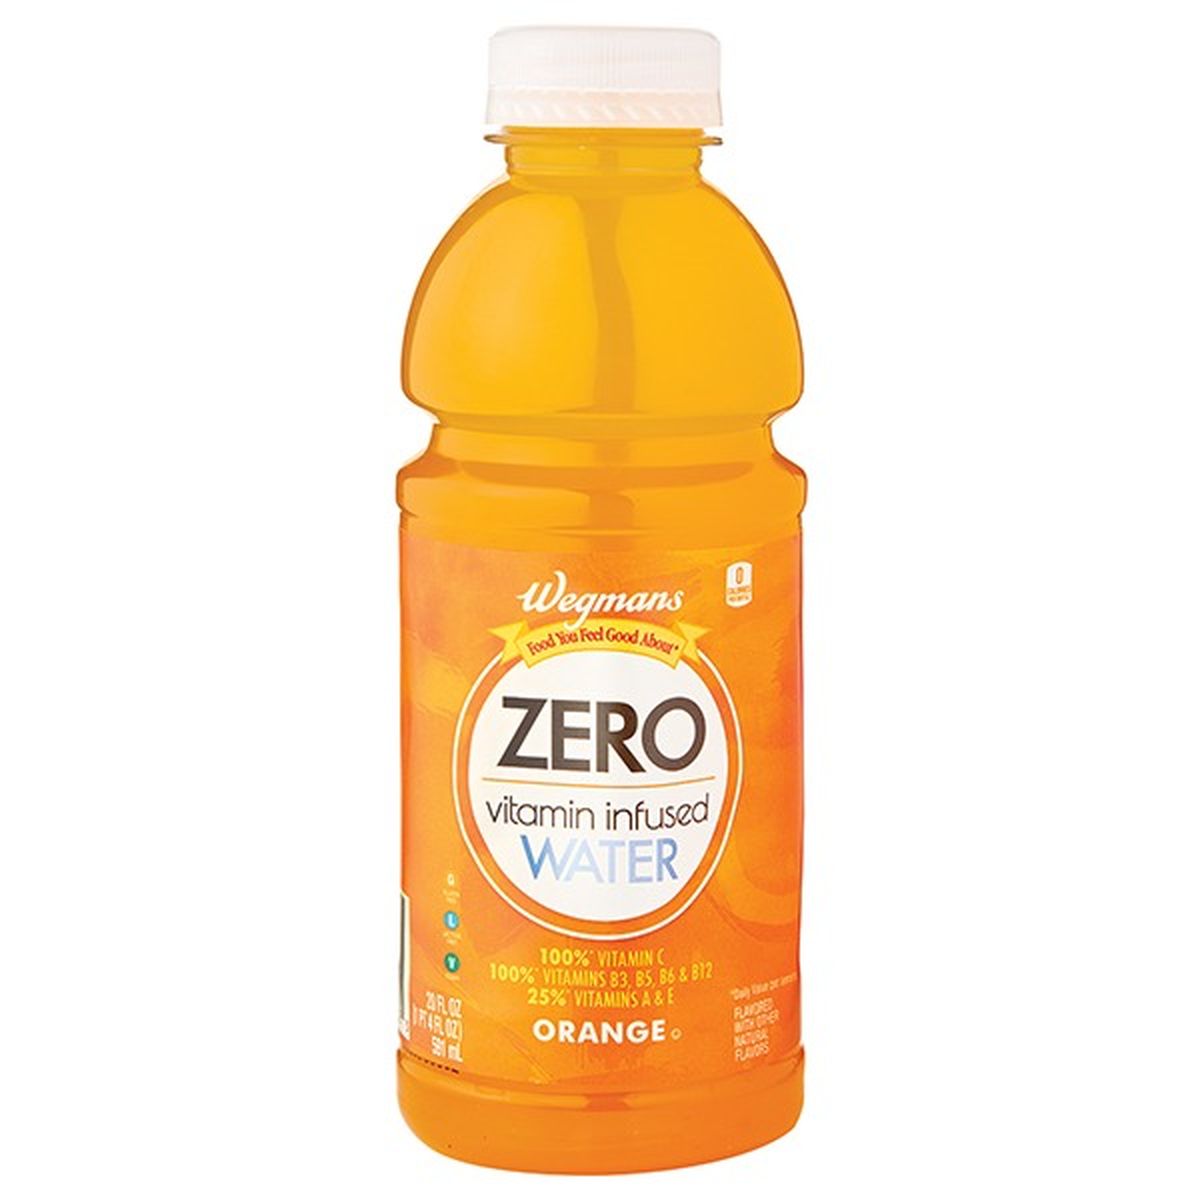 Calories in Wegmans Zero Vitamin Infused Water, Orange